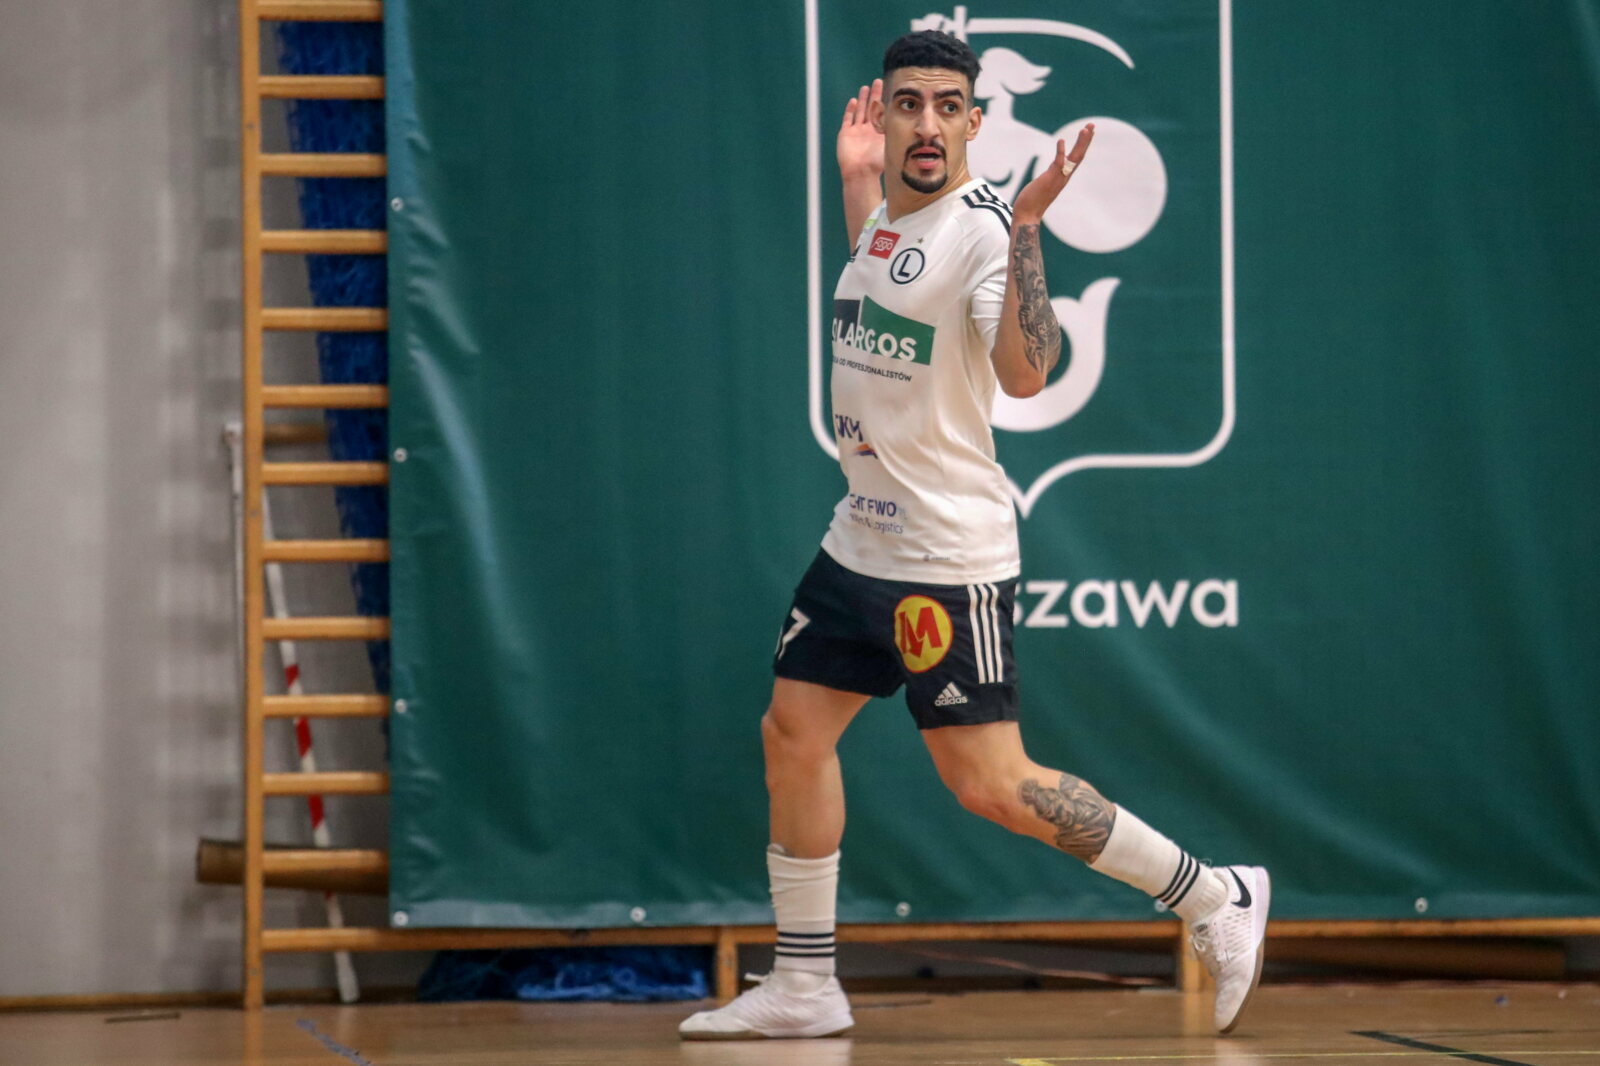 Andre Luiz Legia Warszawa - Futsal Leszno 6:2